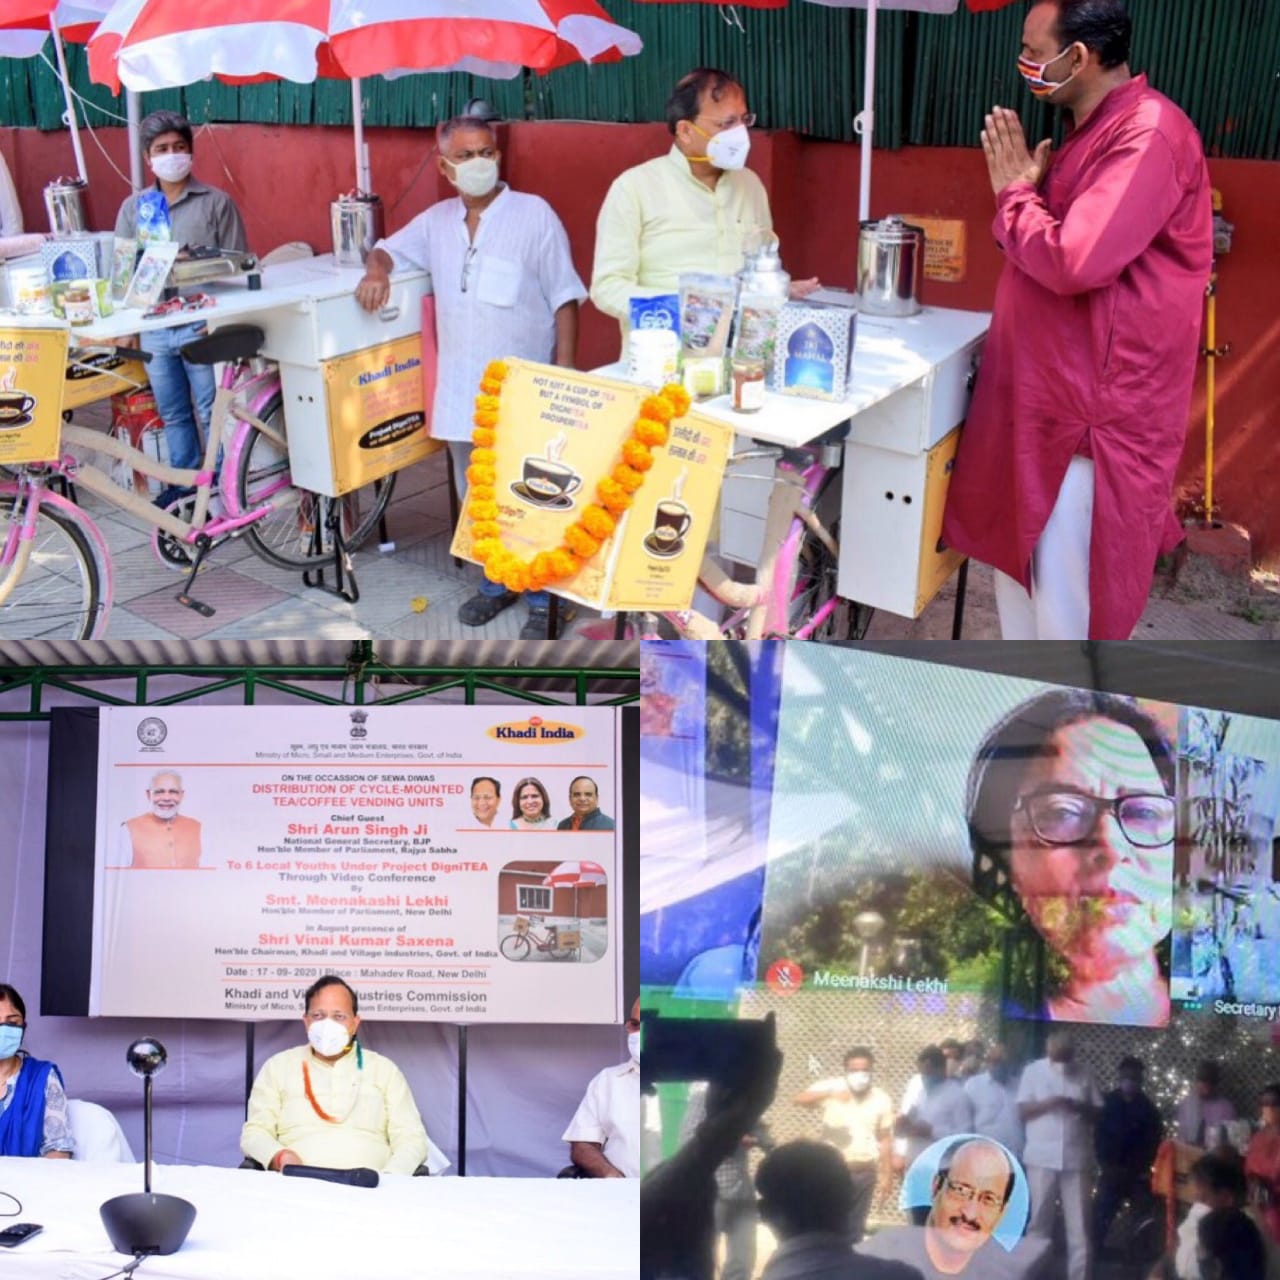 MPs Shri Arun Singh & Meenakashi Lekhi launch KVIC’s Innovative Project DigniTEA in Delhi